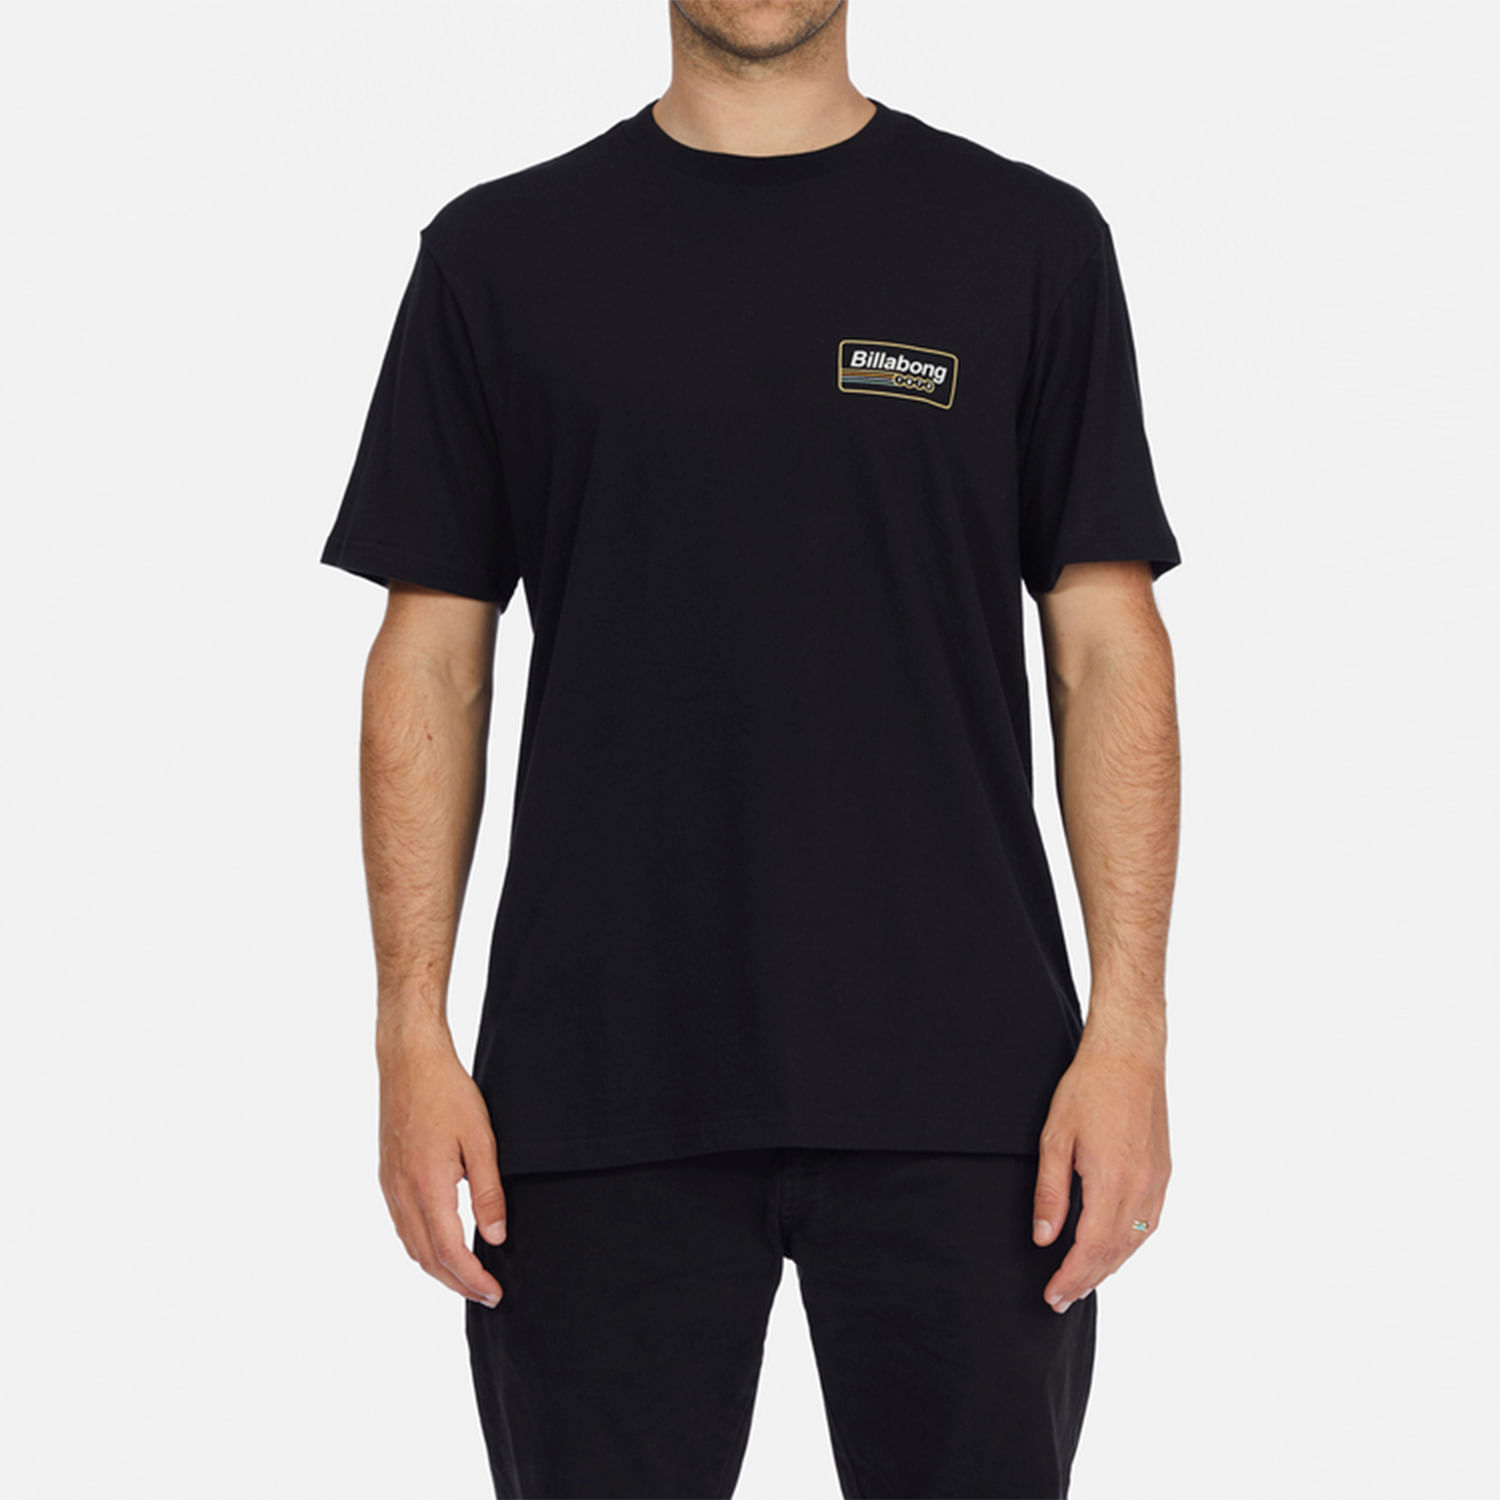 Camiseta Billabong Hombre Nuevos - Heat Corta Sleeve Negros